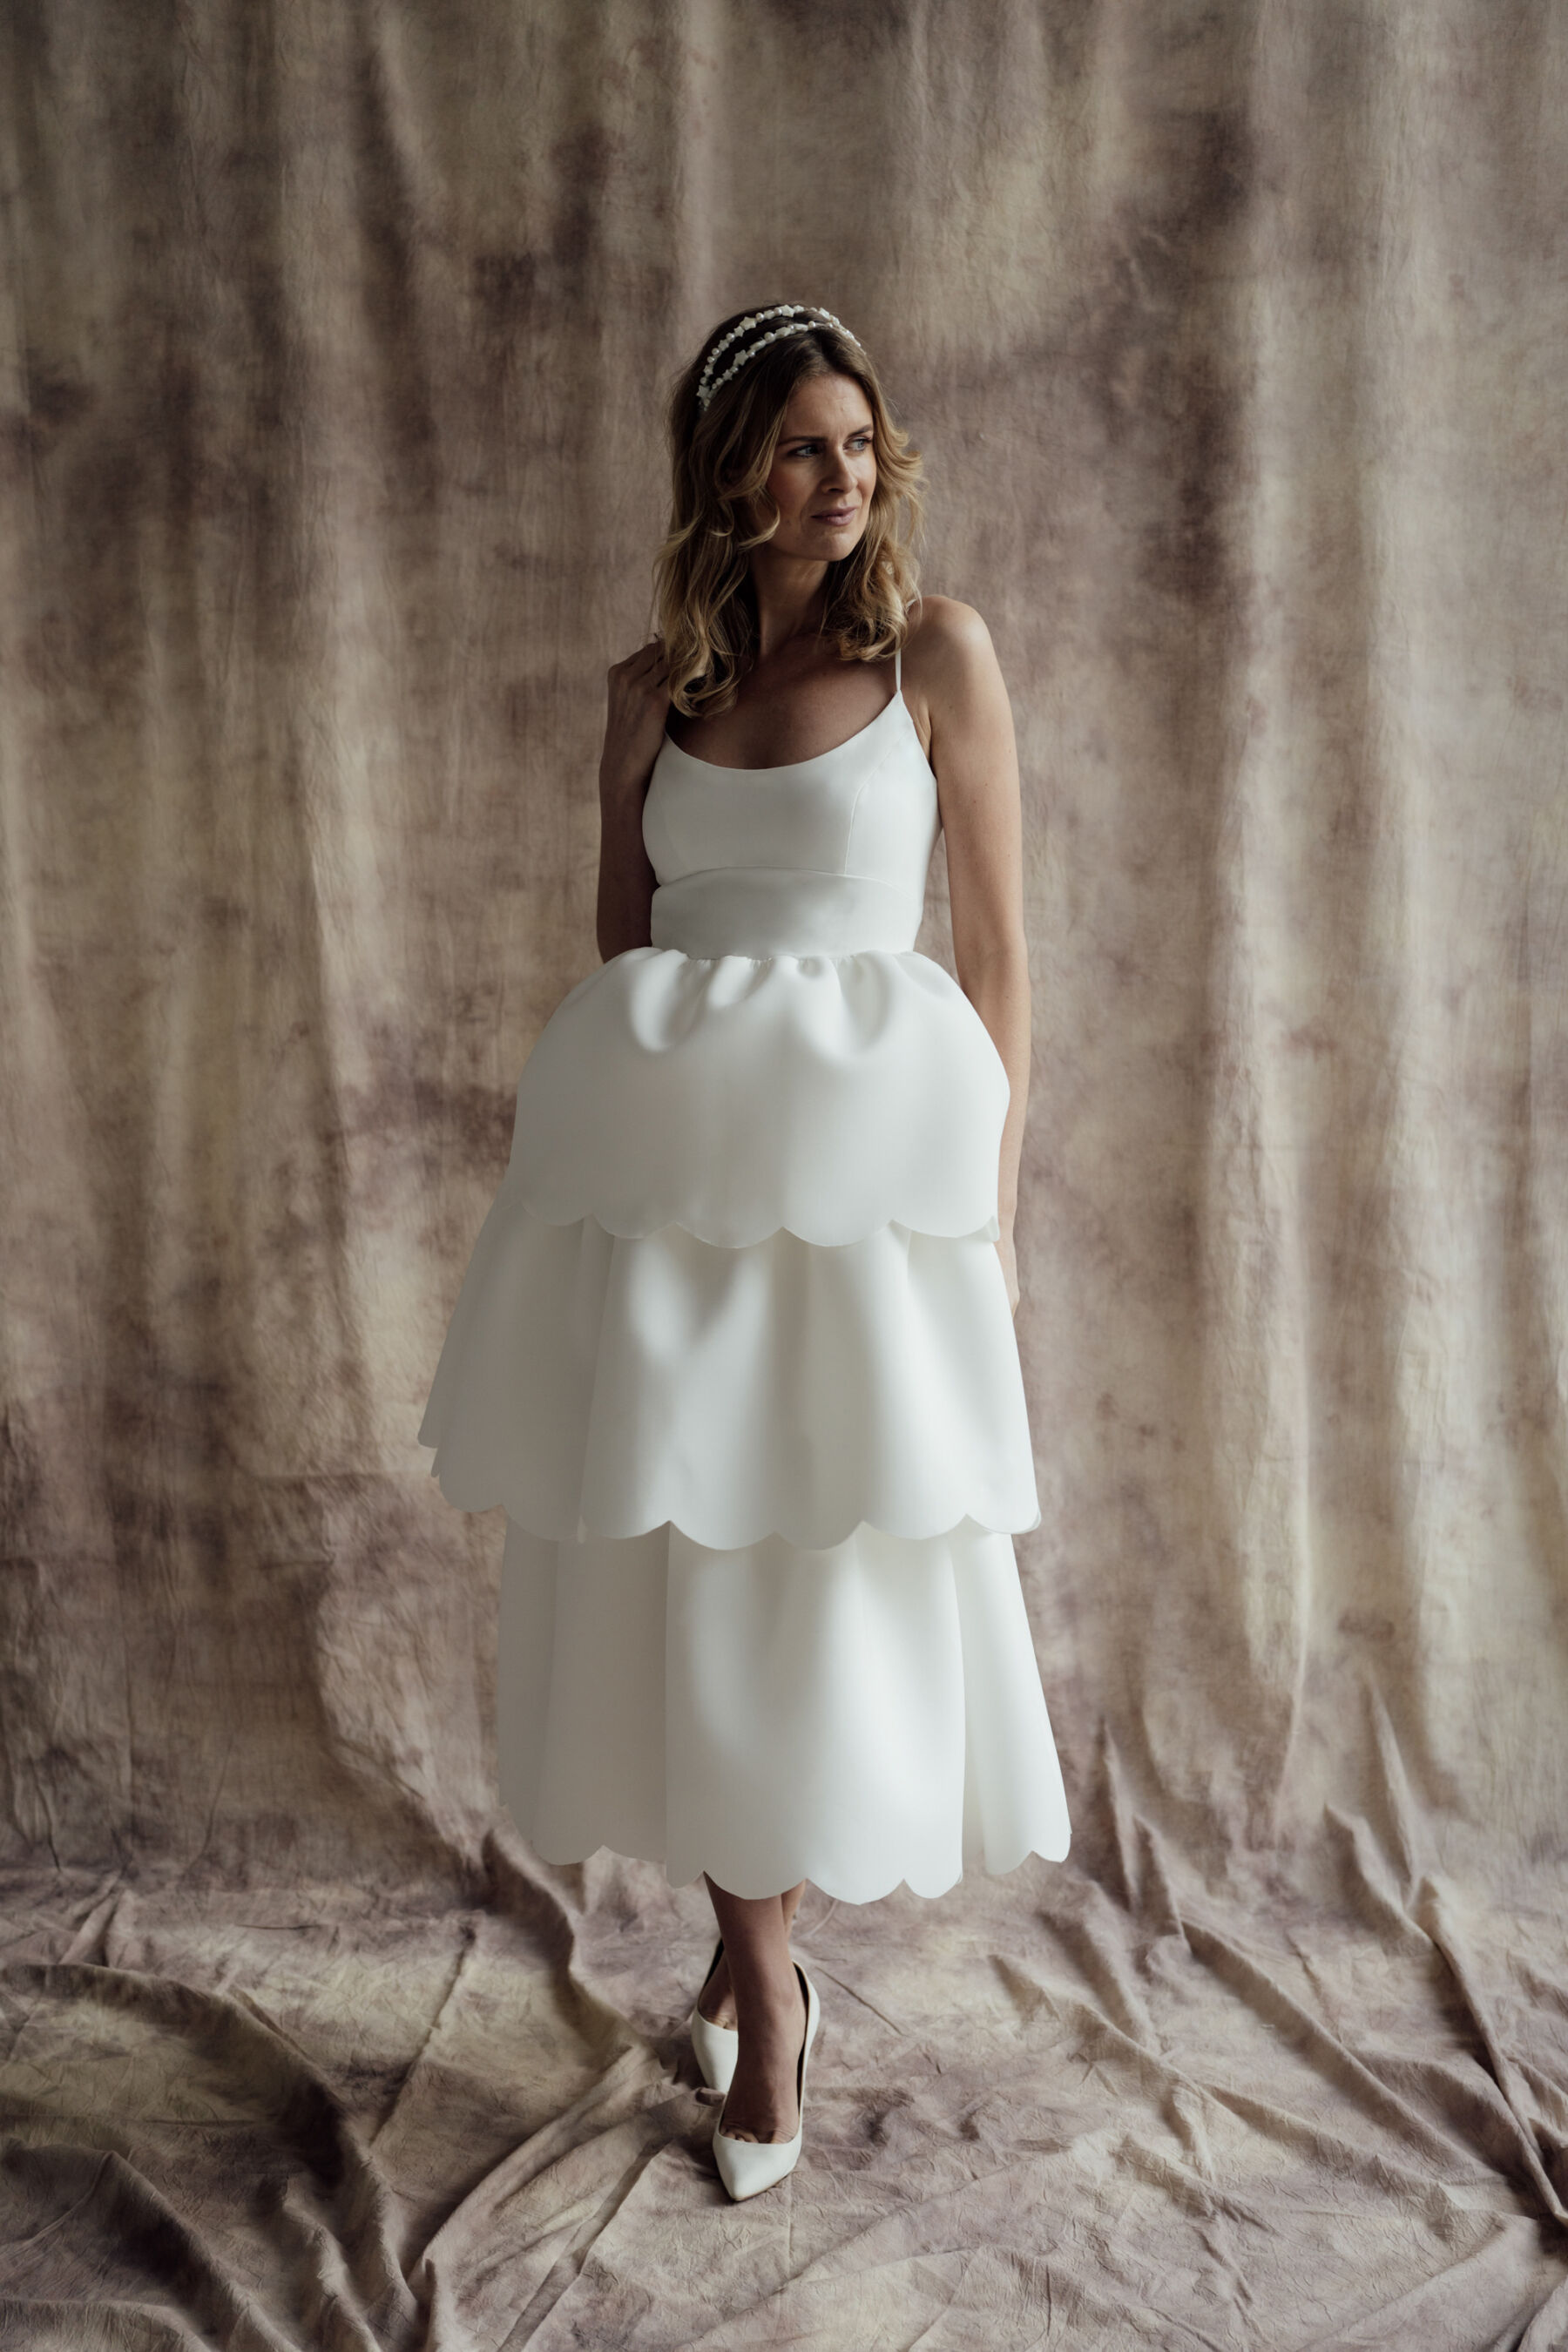 Scalloped wedding dress by Wilden London. Zach & Grace Photography.